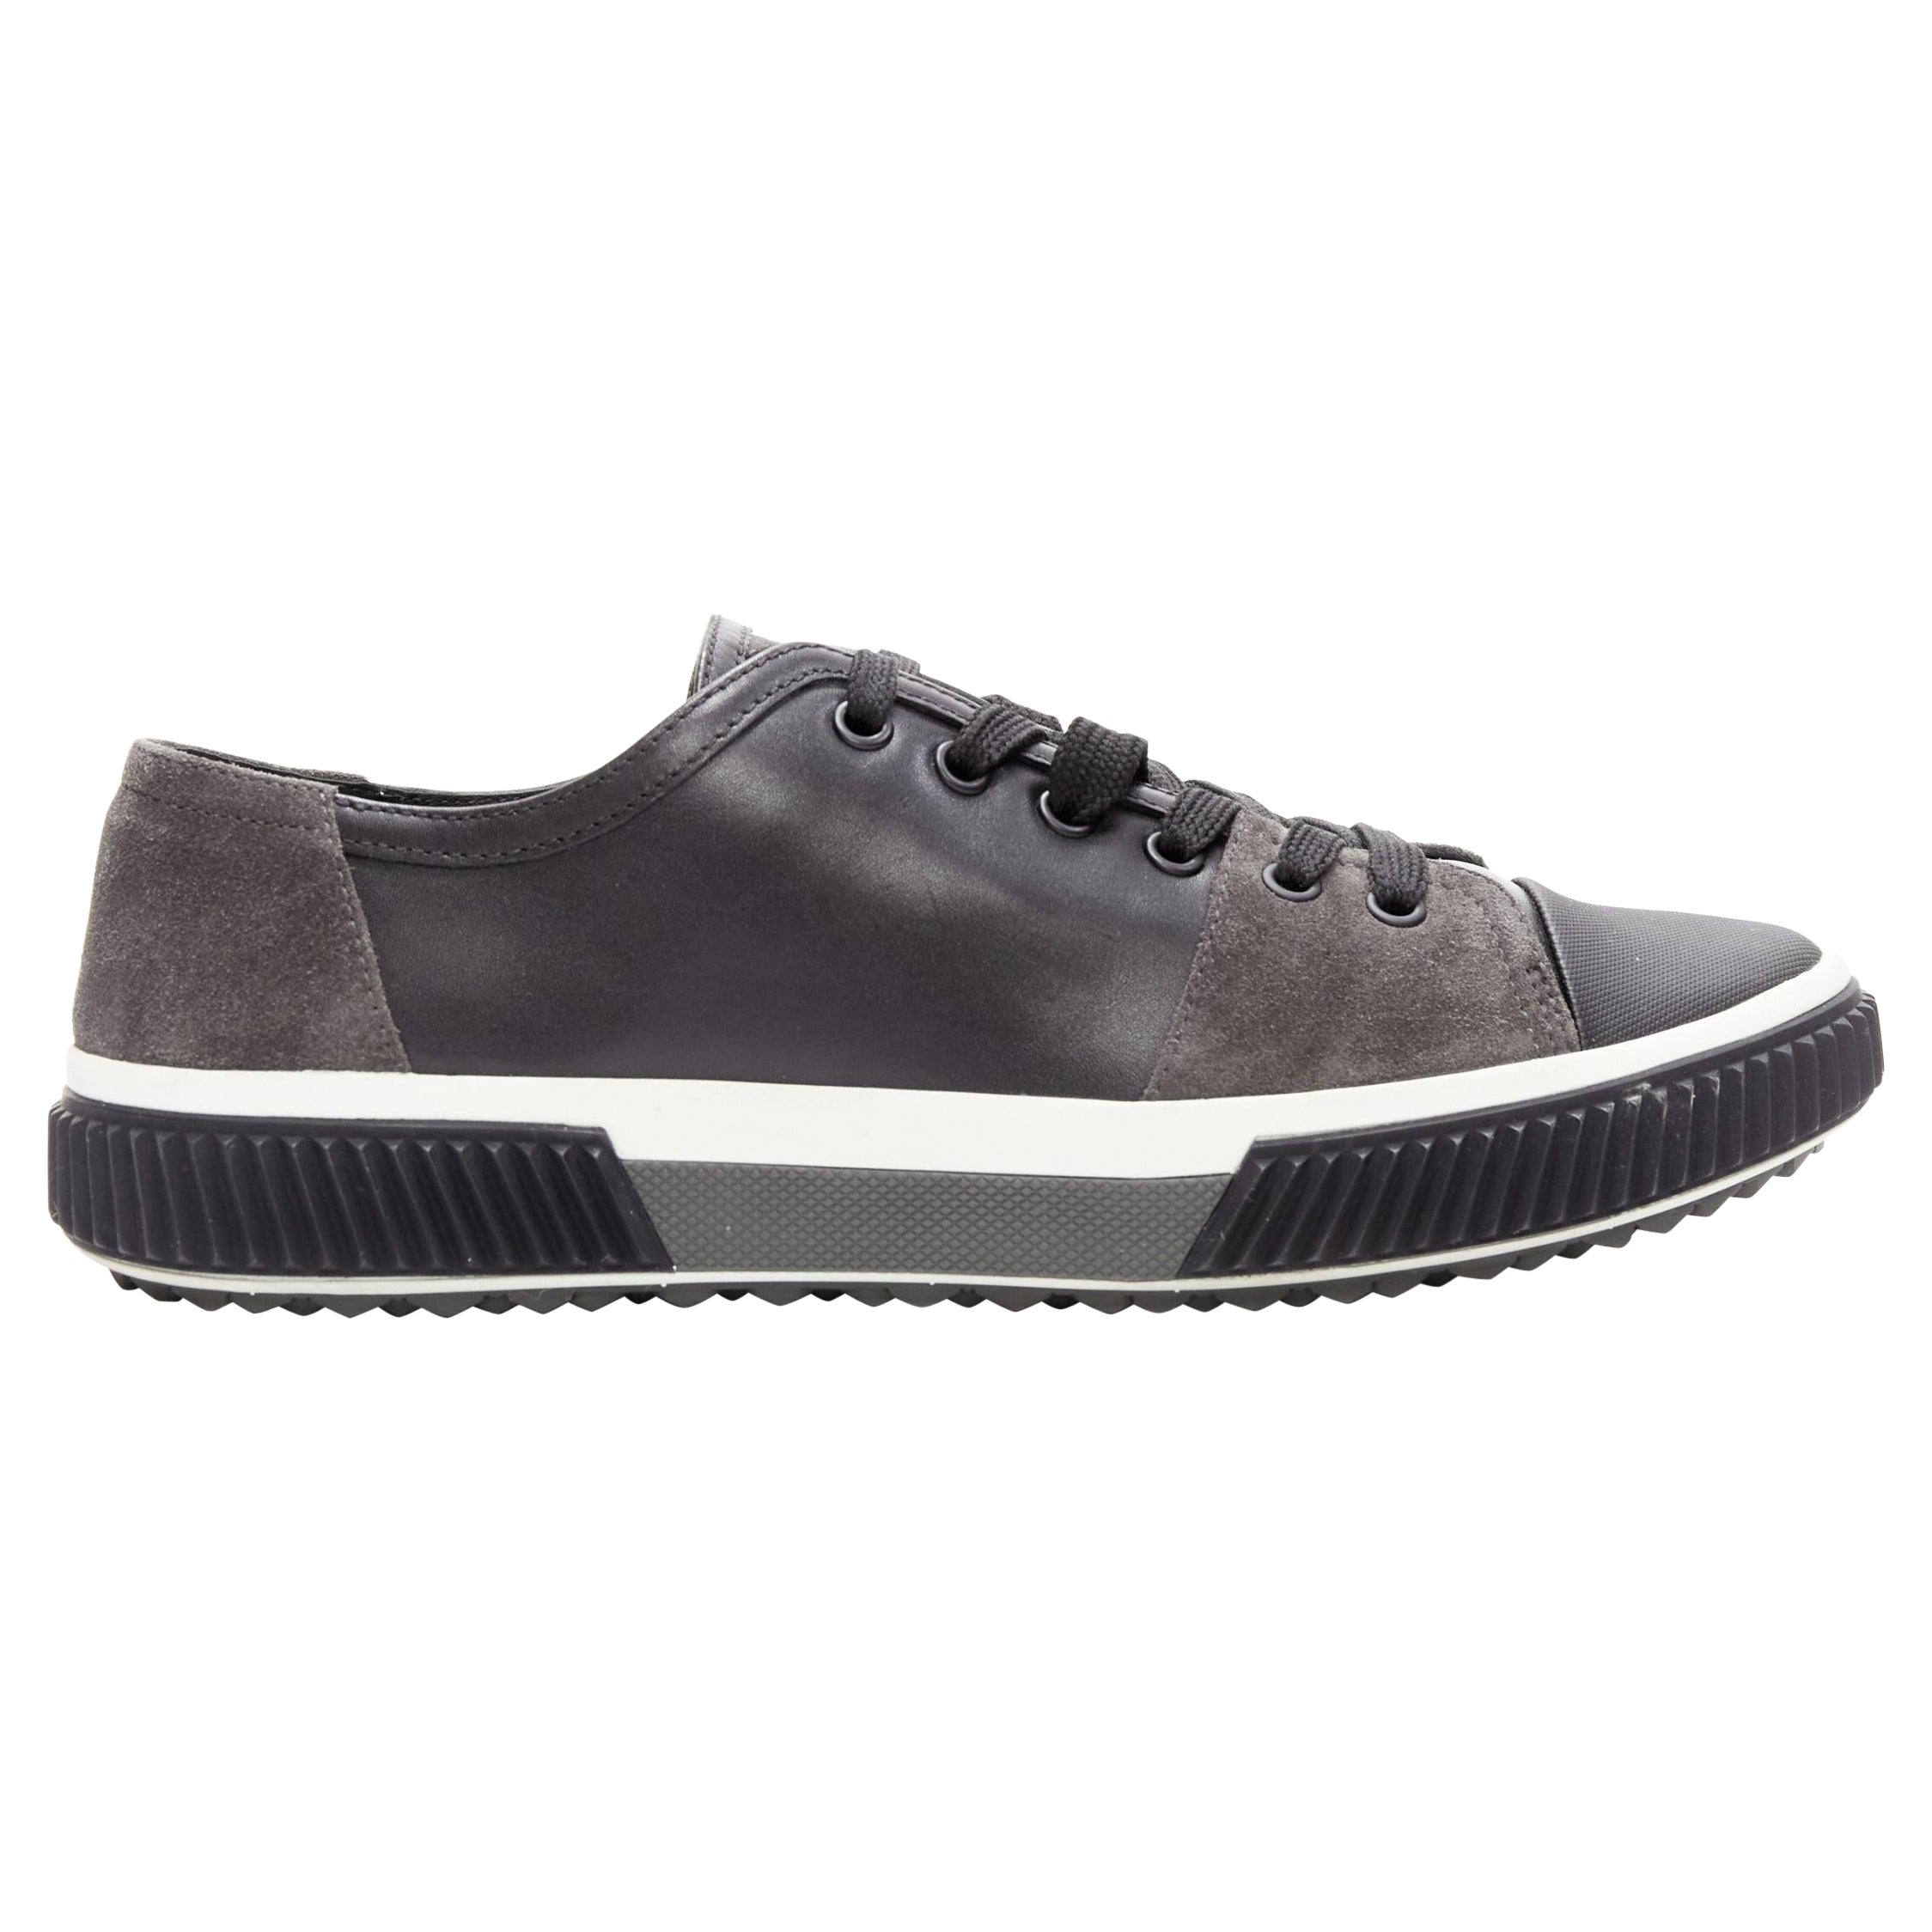 PRADA Stratus black grey suede leather low top sneakers UK5.5 EU39.5 For Sale